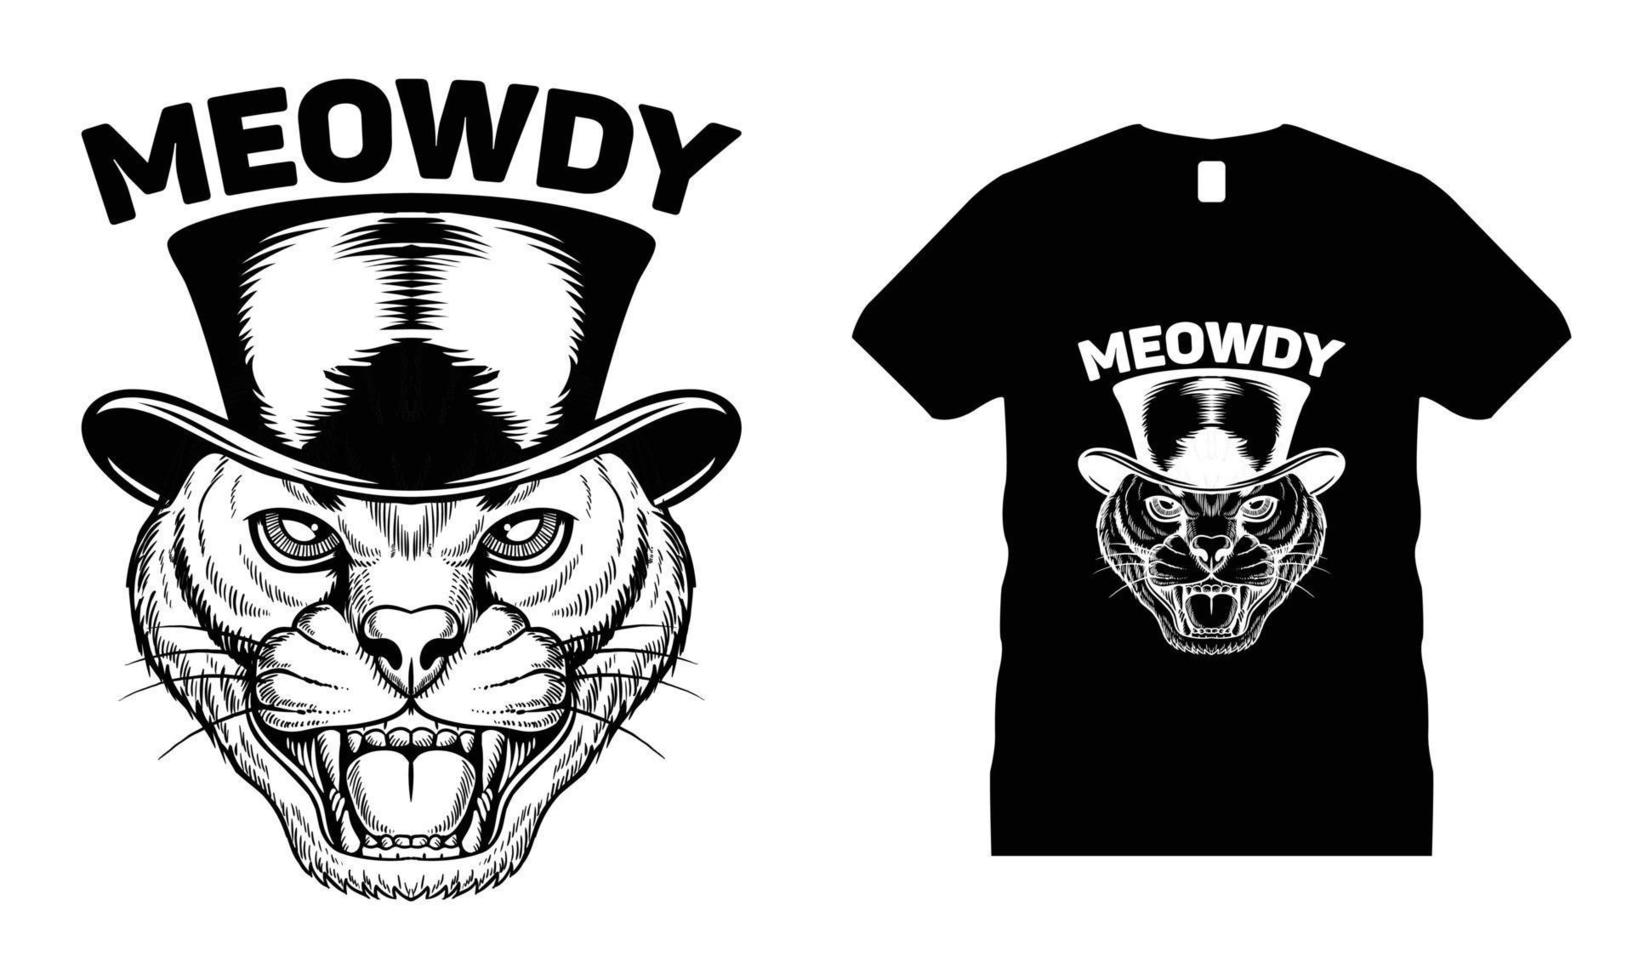 gato animal mascotas vector de diseño de camiseta motivacional. uso para camisetas, tazas, pegatinas, etc.